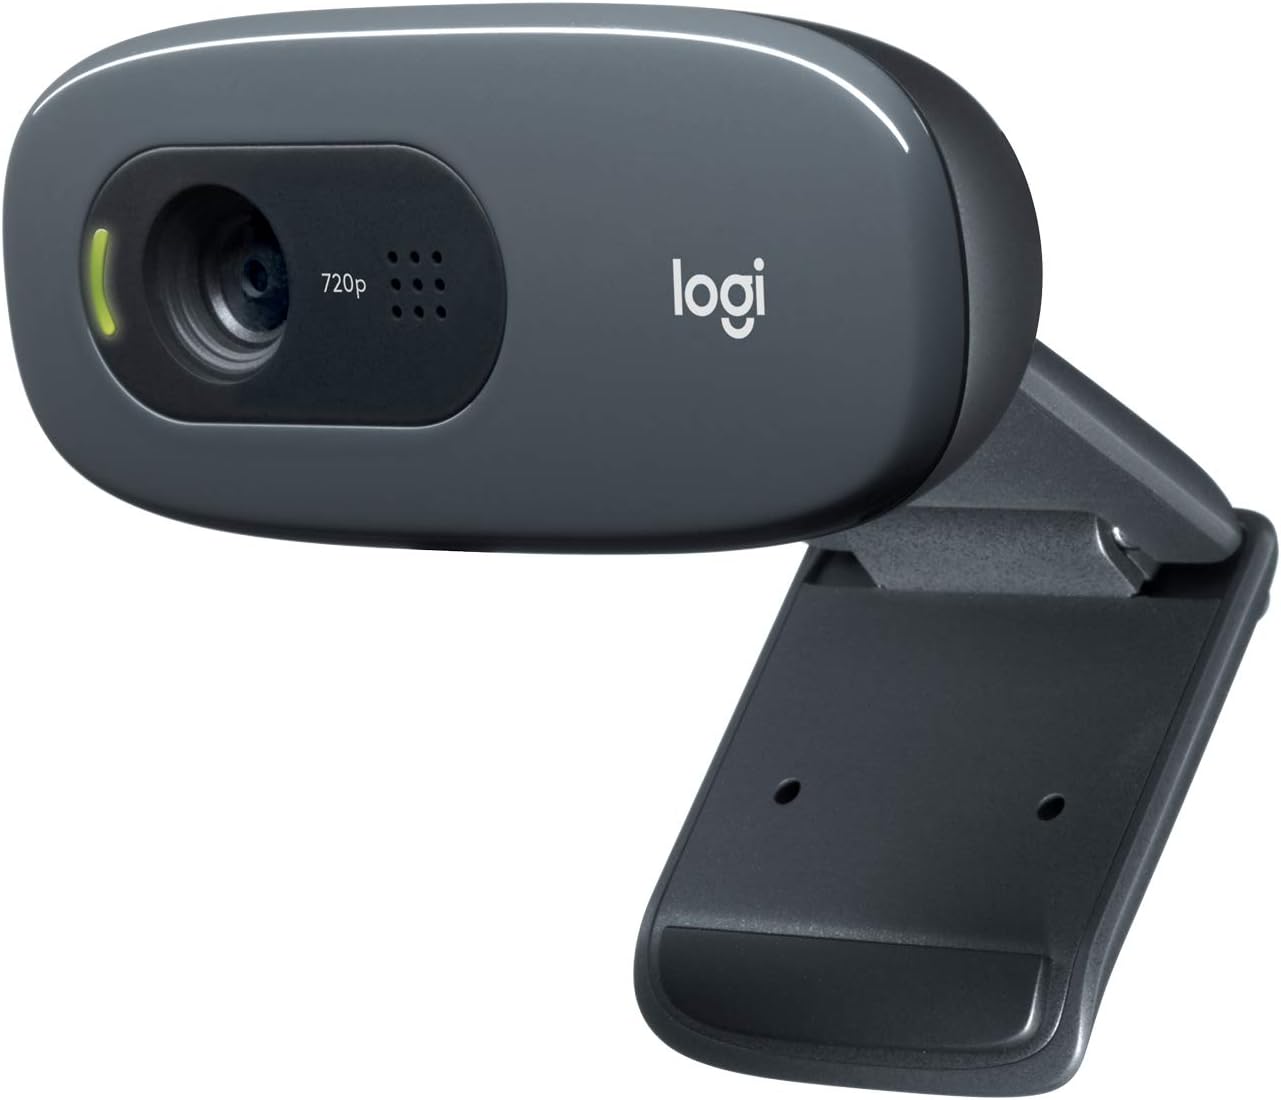 webcam under 30 dollars detailed review